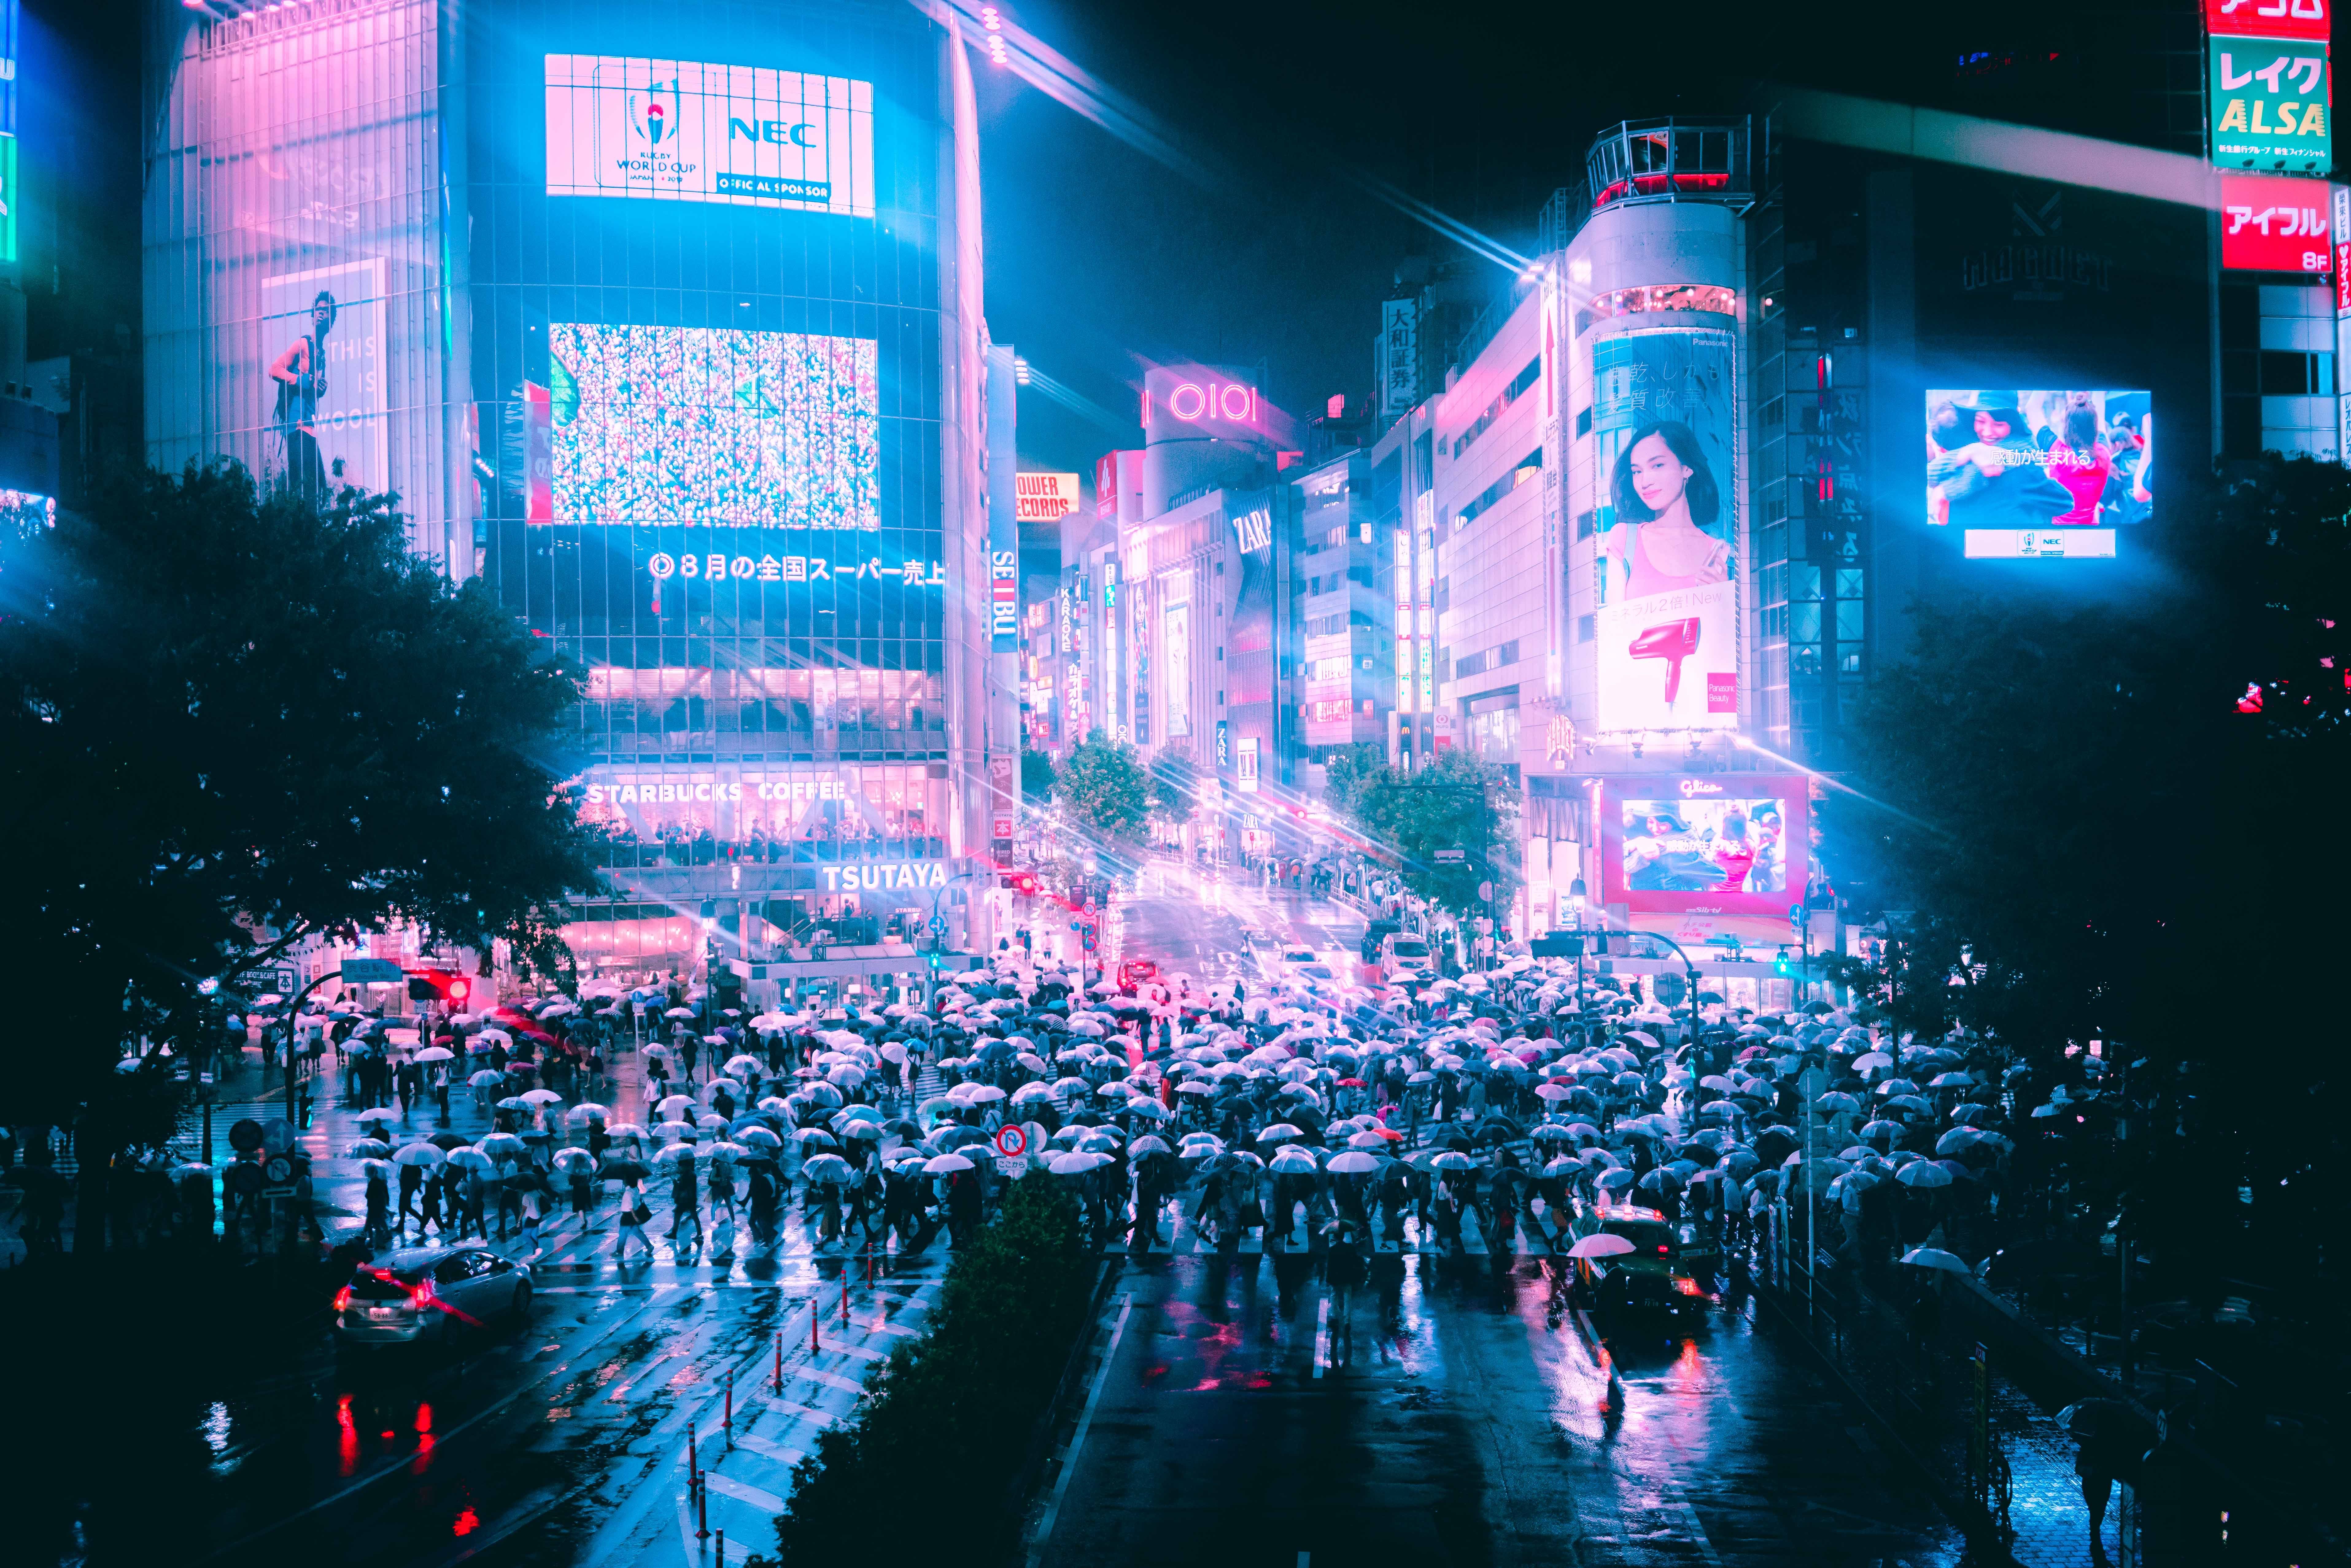 7660x5109 #umbrella, #tokyo, #neon, #crowd, #manga, #cyberpunk, #Creative Commons image, #street, #city, #rain, #bright, #japan, #urban, #weather, #night, #asium, #anime Gallery HD Wallpaper